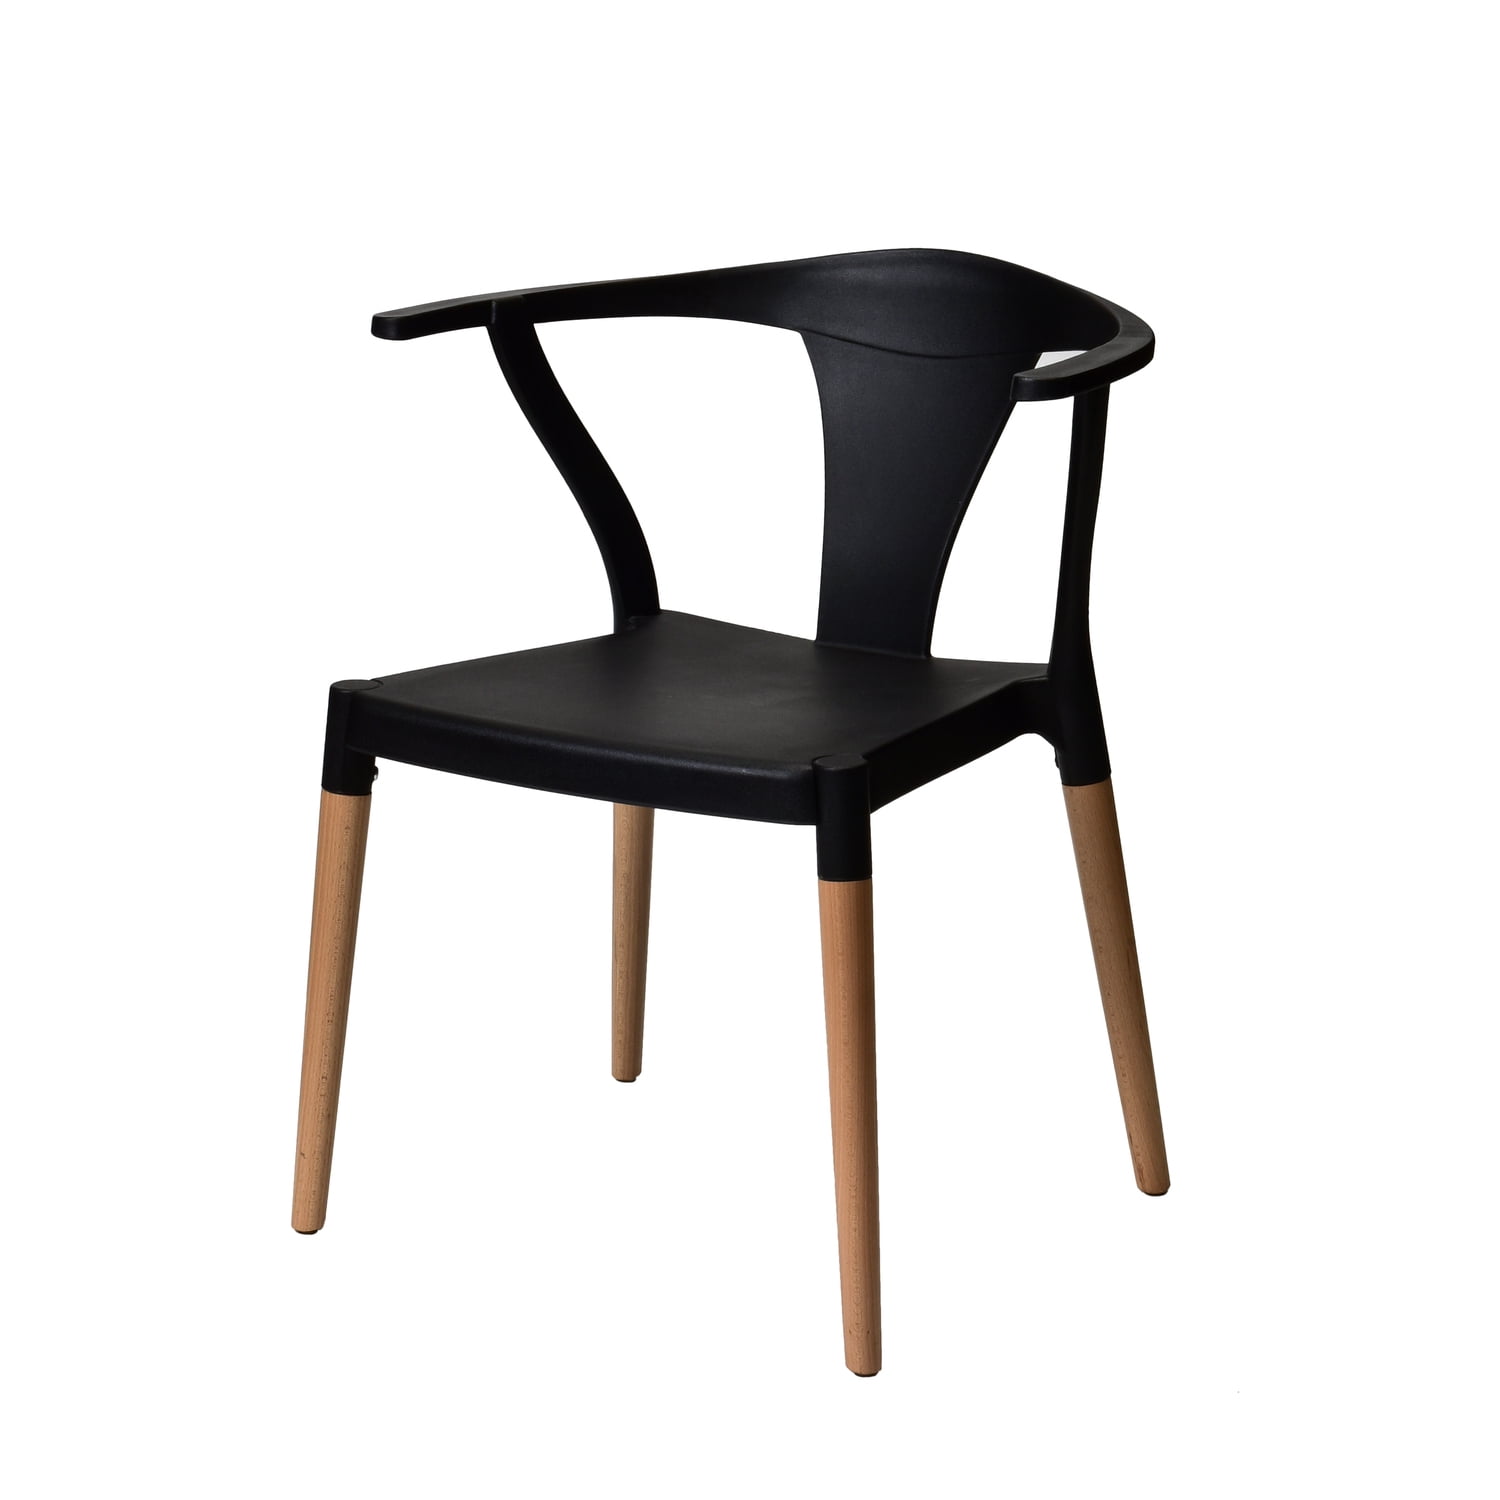 Cdpw1001-zsfp-bk-4 Mid Century Modern Arm Chair, Black - 29.5 In. - Set Of 4